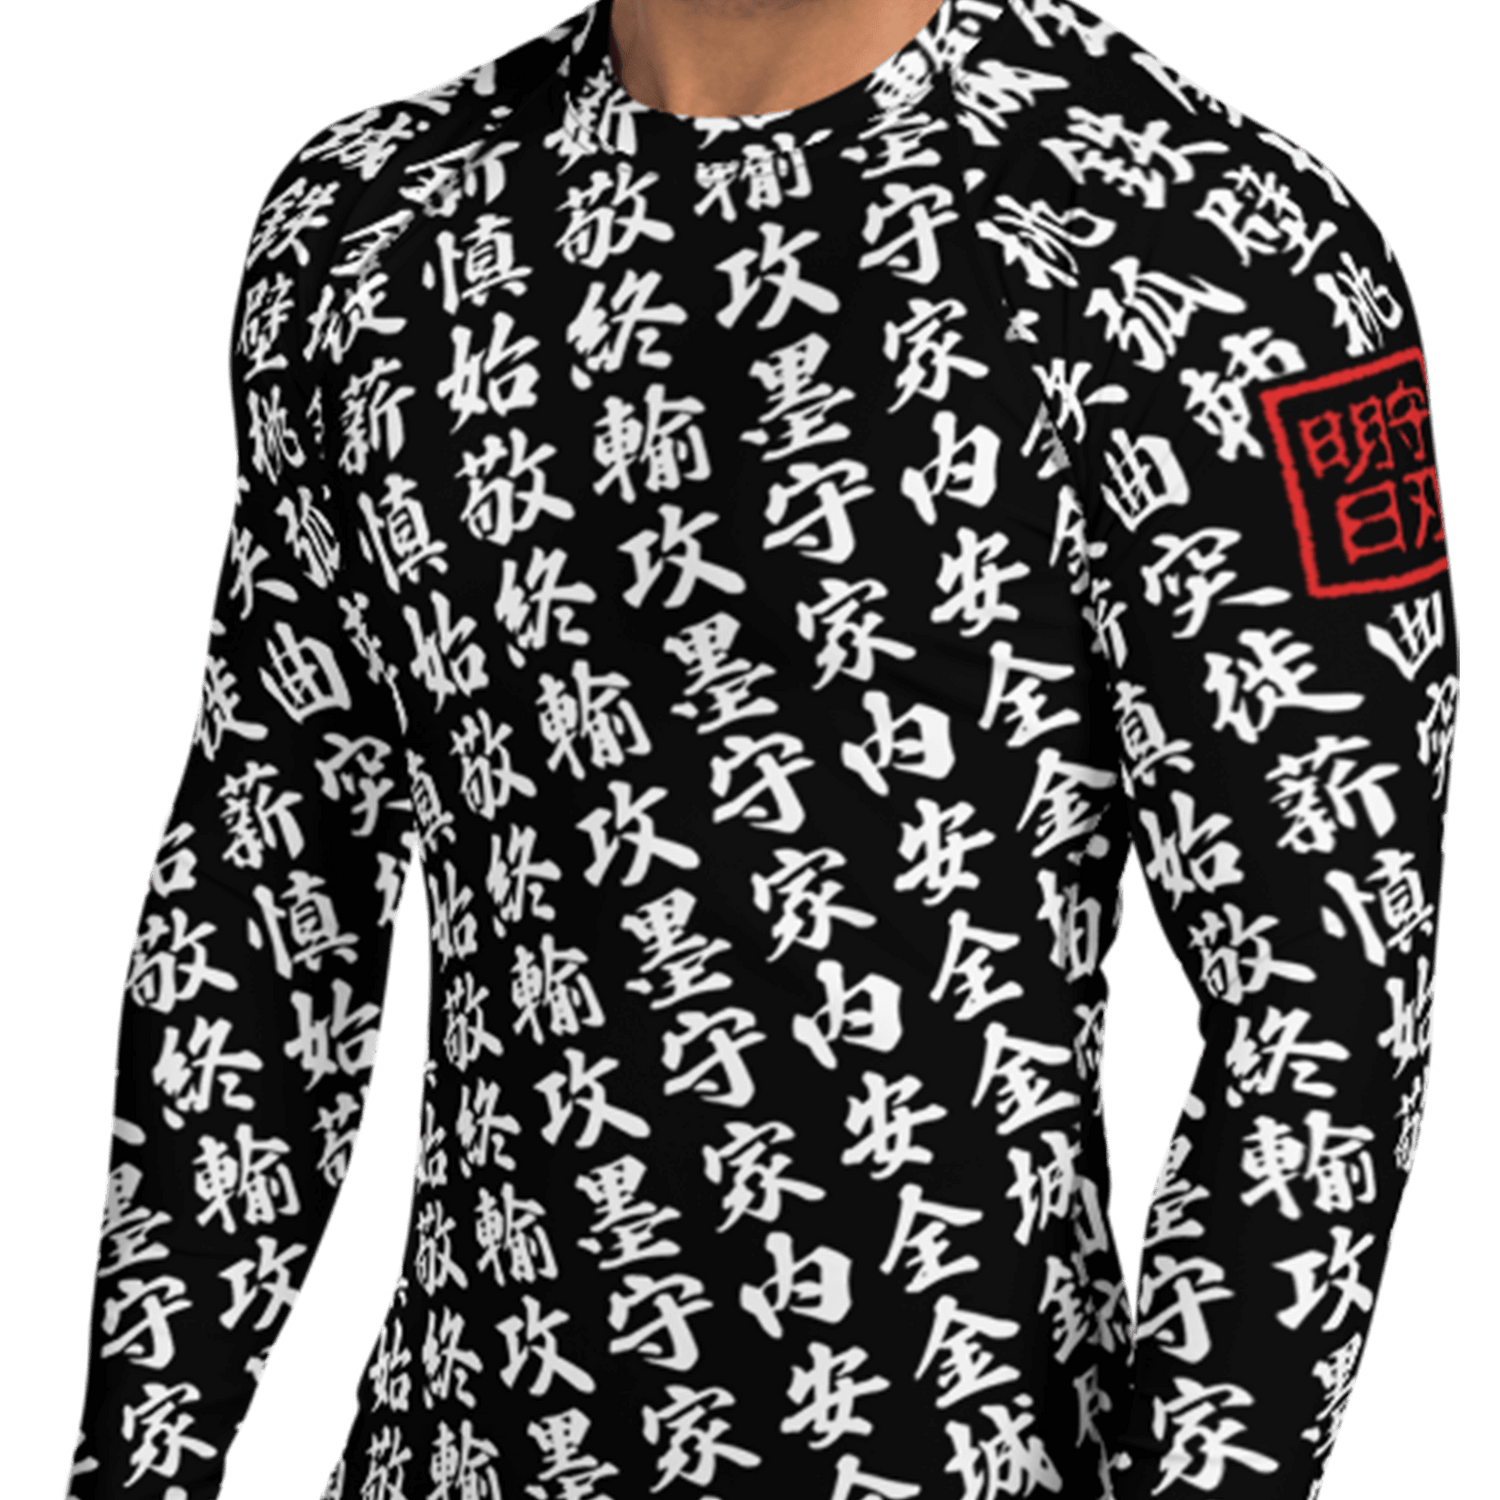 Men black long sleeve rash guard with all-over print in Japanese KANJI